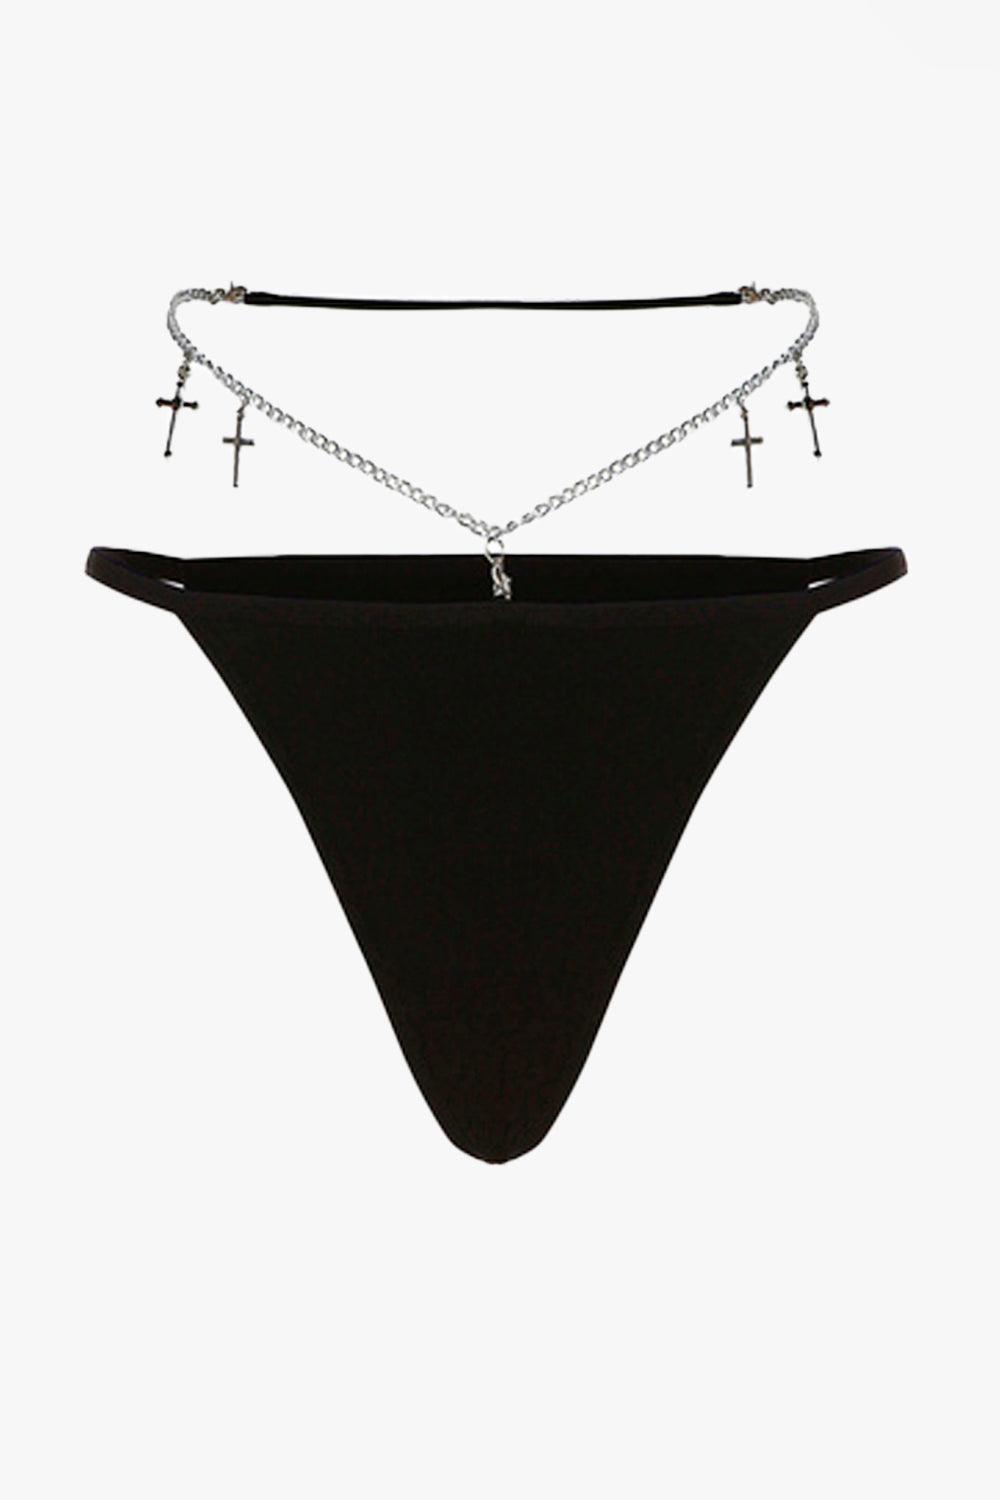 Chain And Crosses Grunge Bikini Panties - Aesthetic Clothes Shop